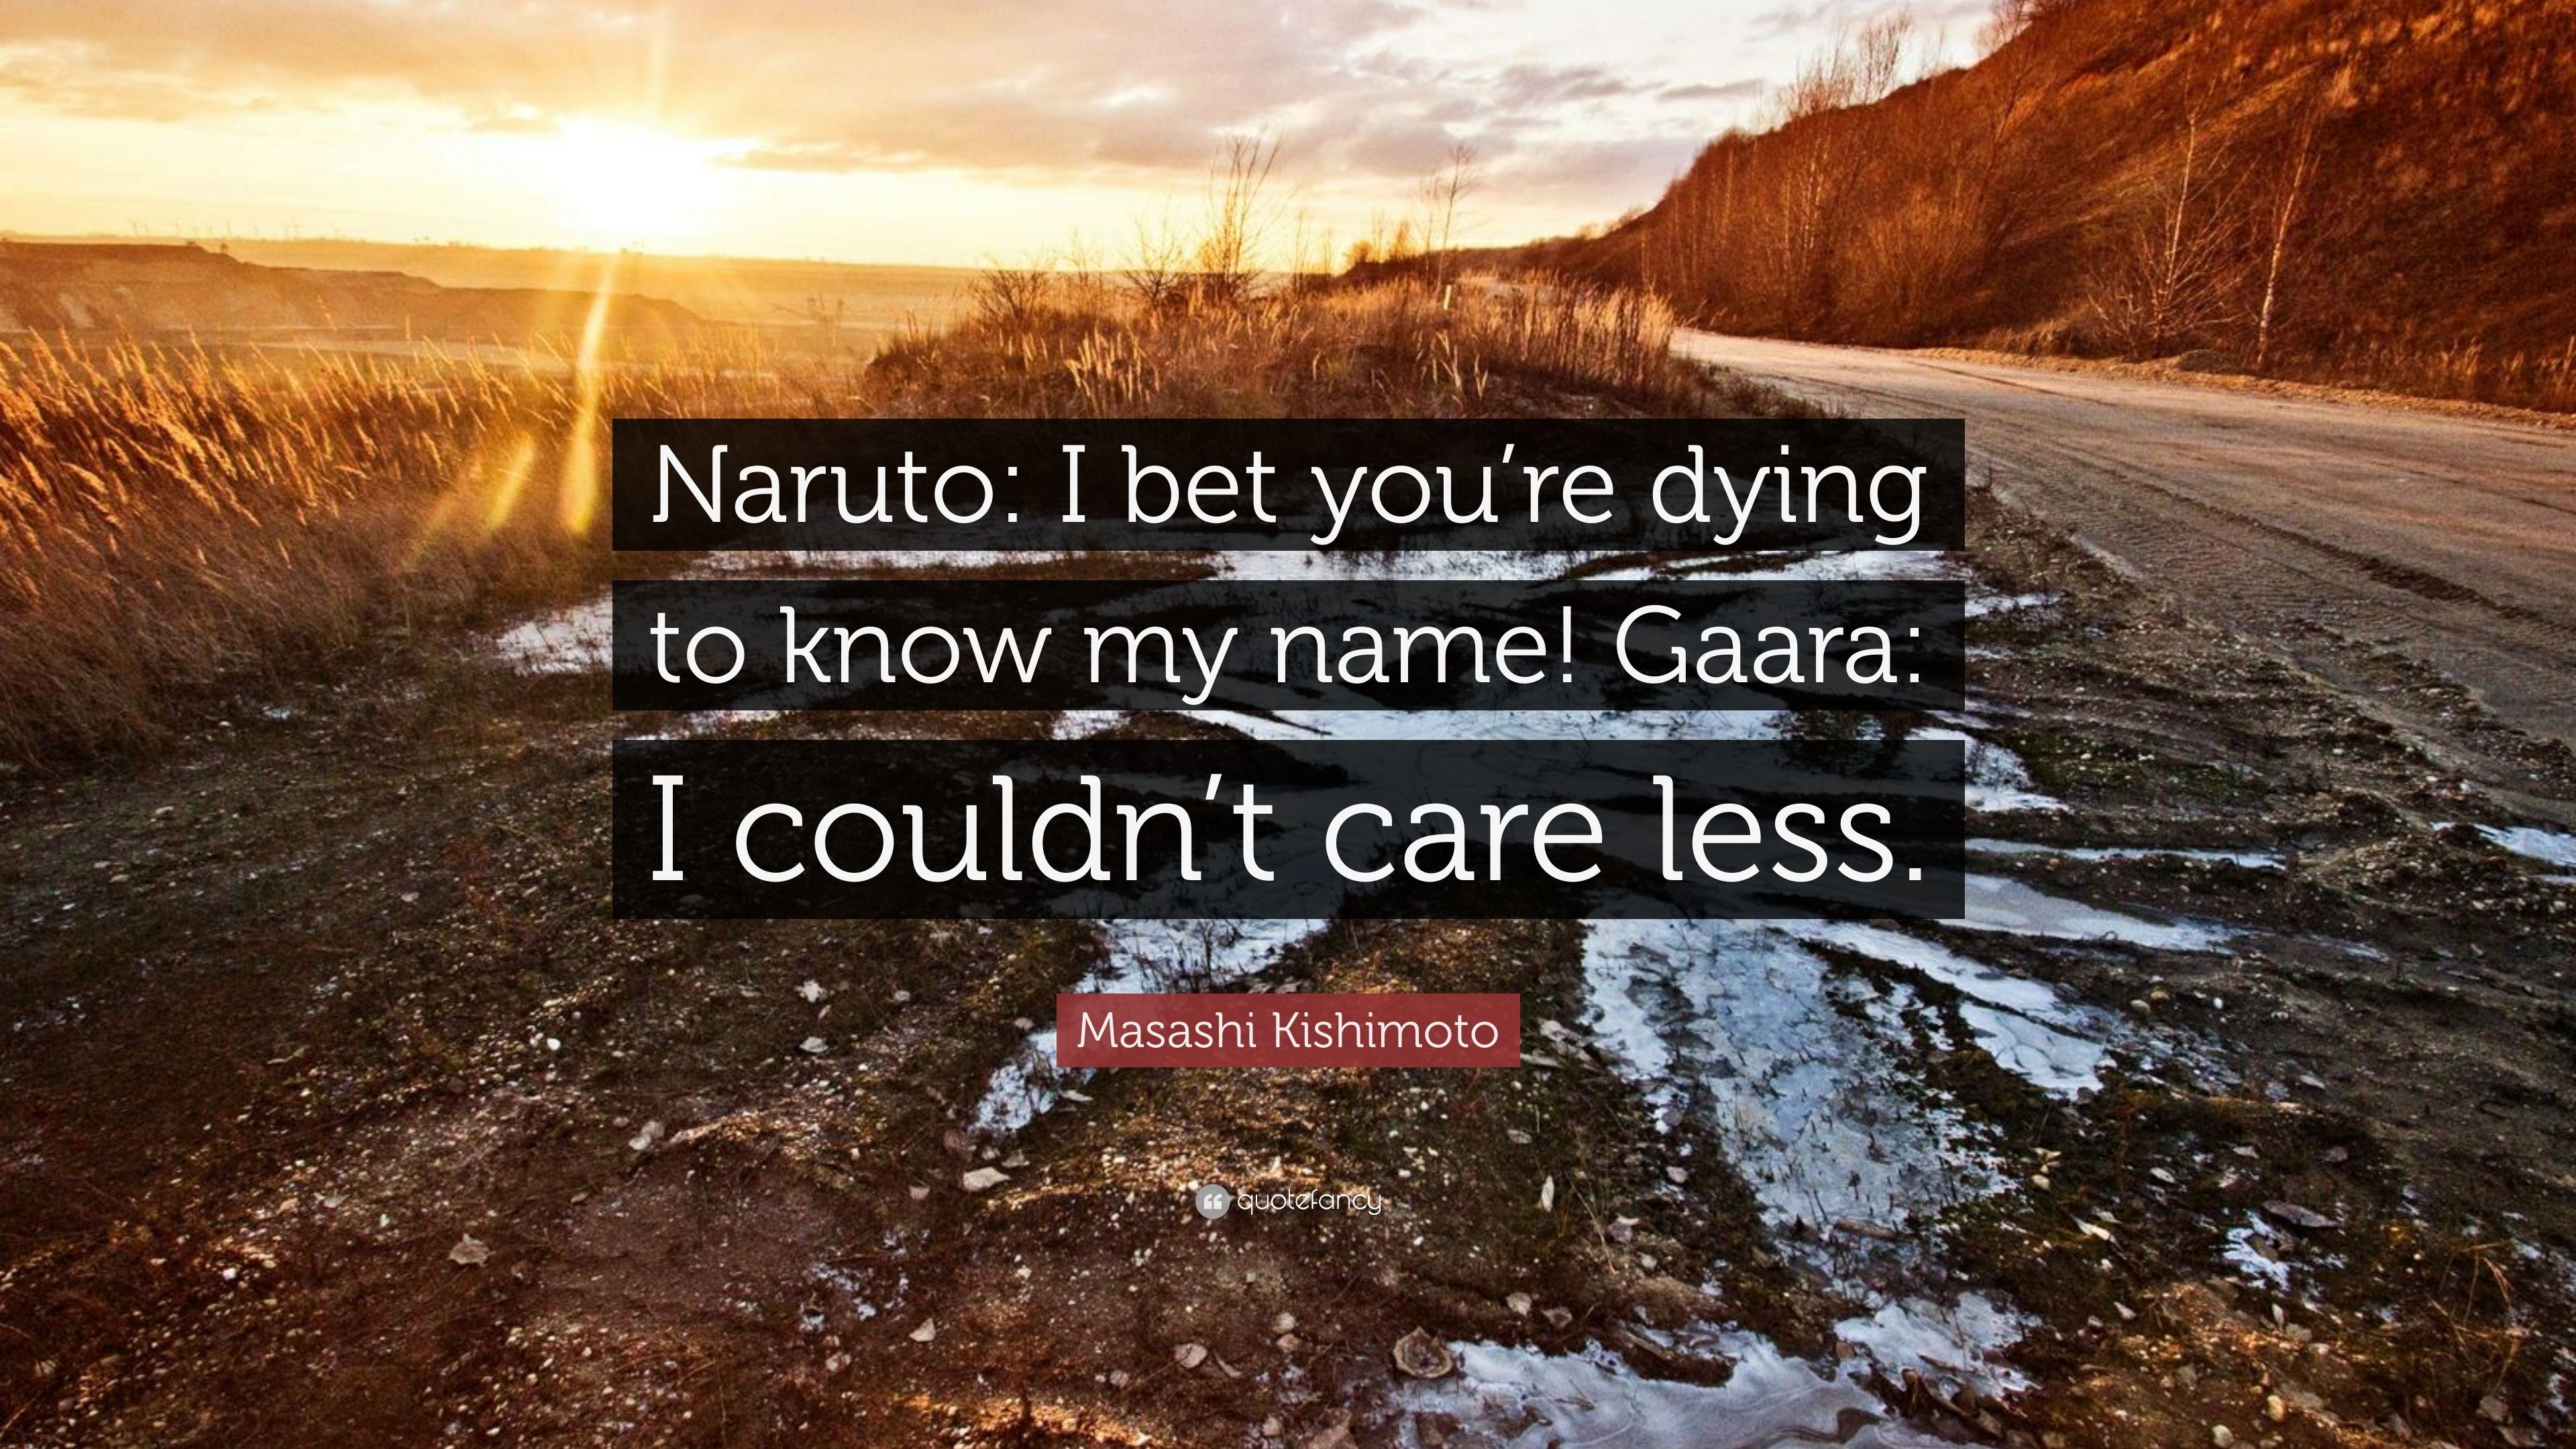 3840x2160 Masashi Kishimoto Quote: “Naruto: I bet you're dying to know my